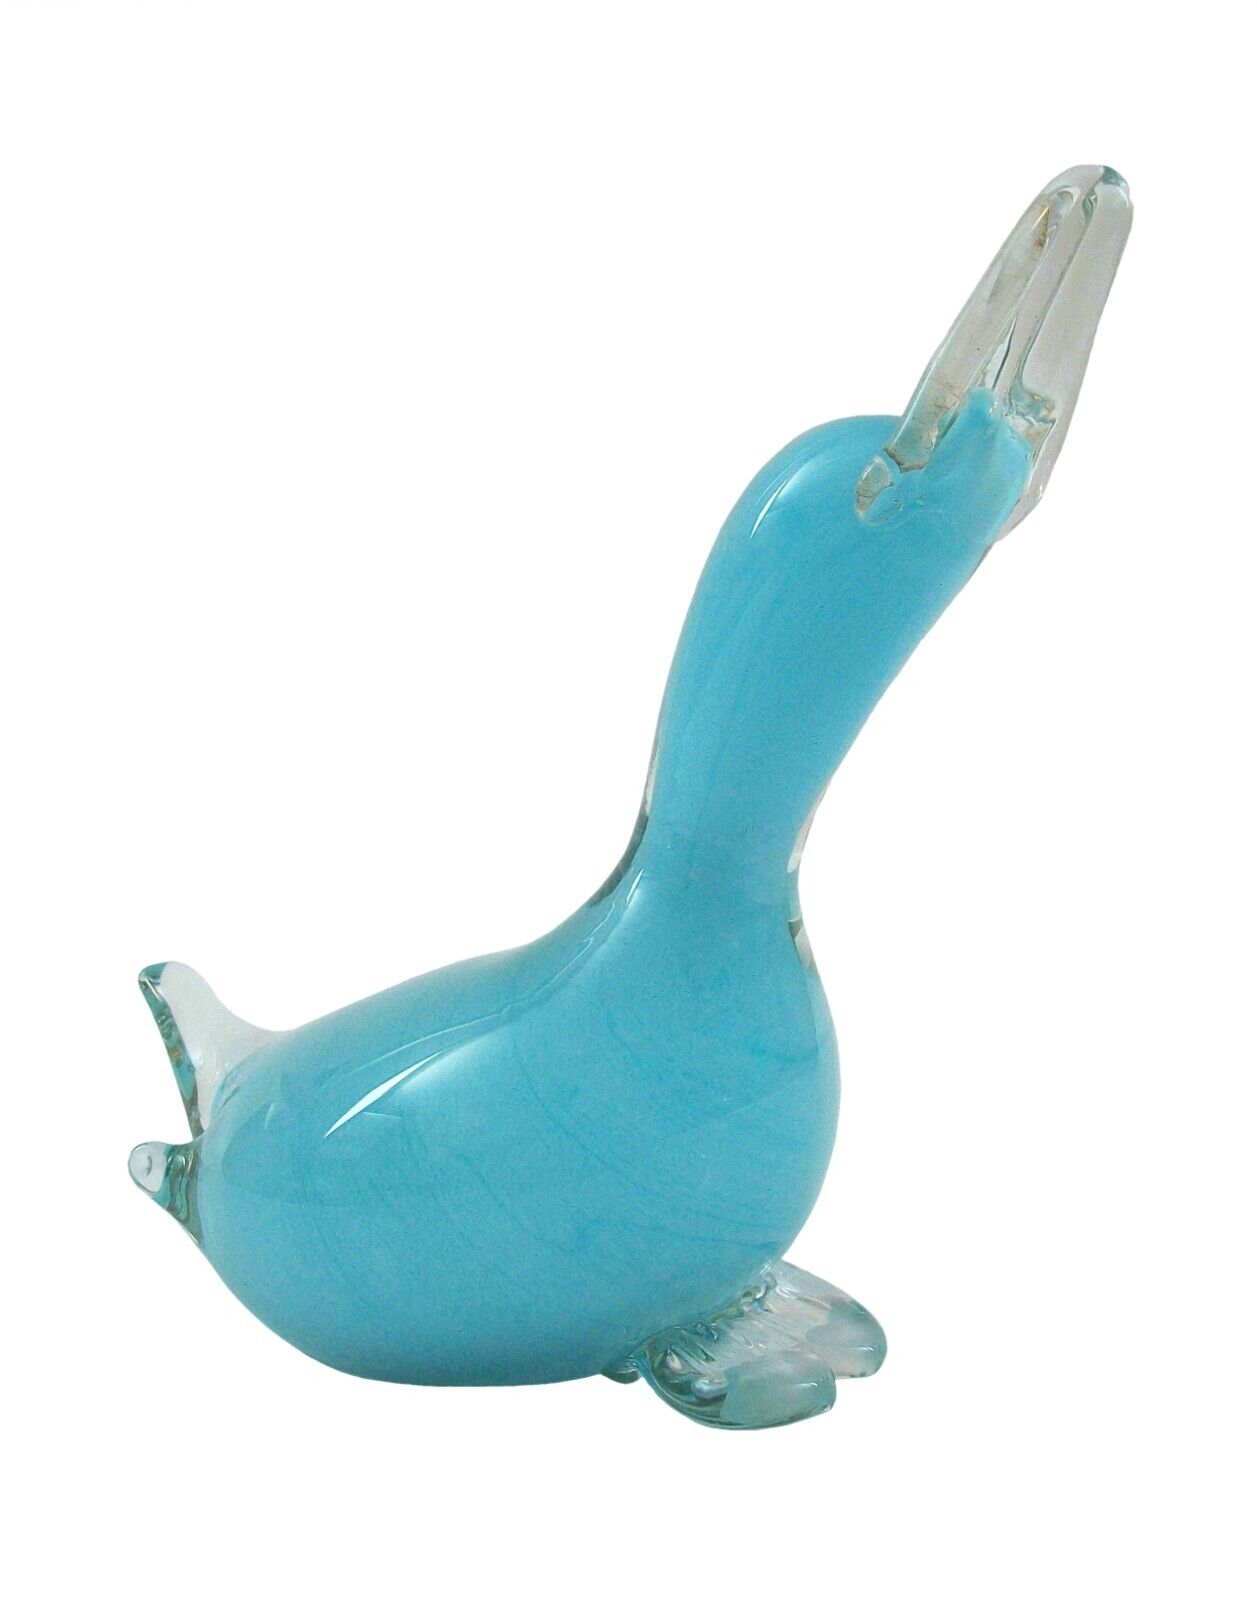 OY KUMELA - ARMANDO JACOBINO - Art Glass Duck Figure - Finland - Circa 1970\'s